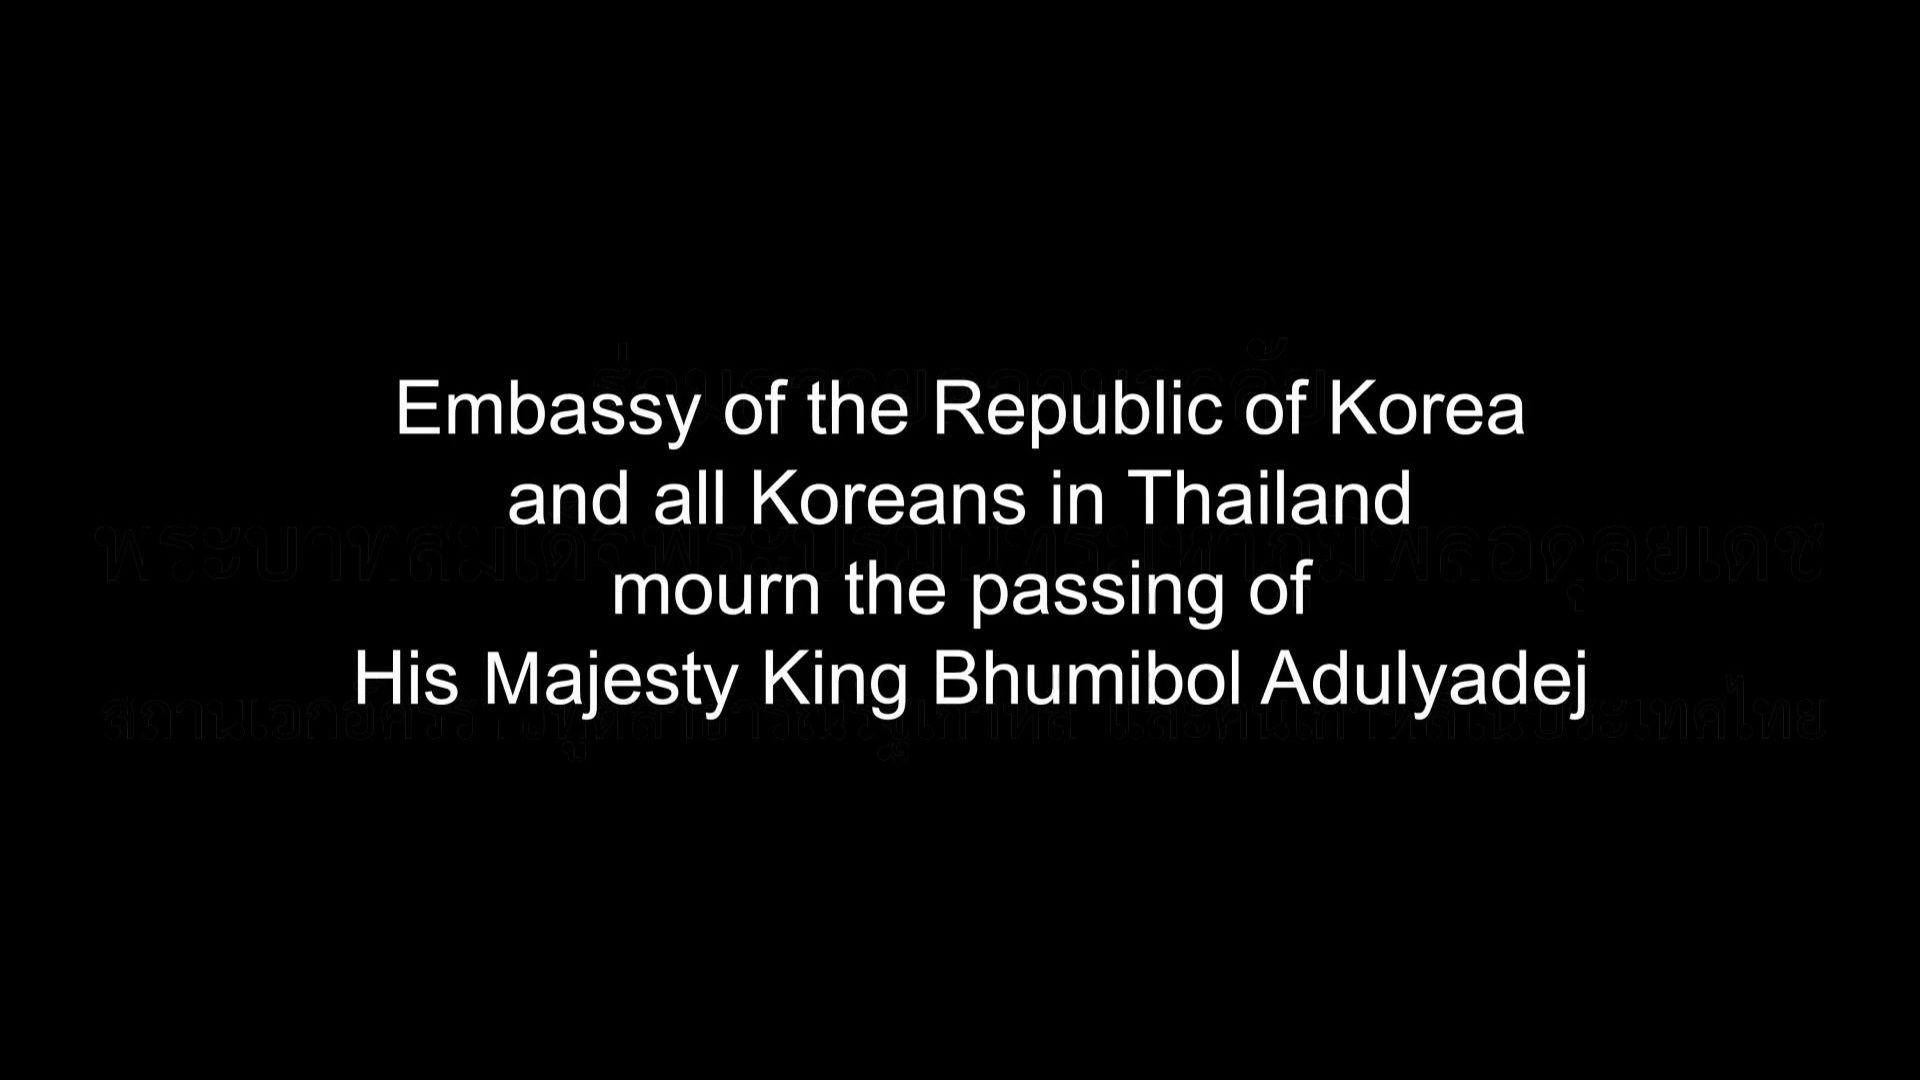 Korea joins hands to mourn for Thailand at Sanam Luan 15 Nov. 2016